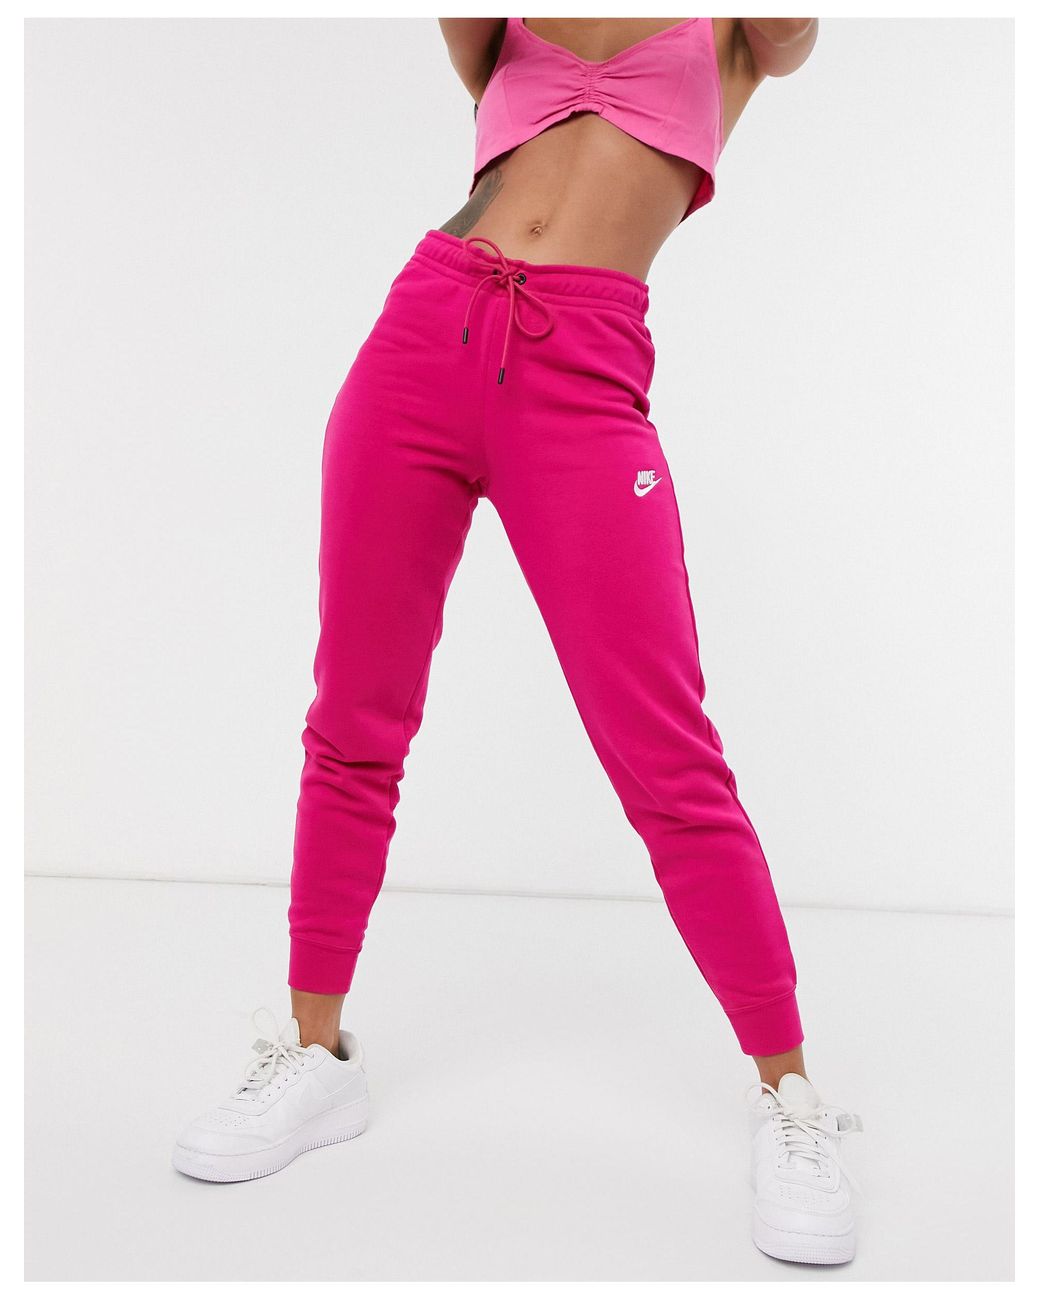 Nike Essential Tight Fit Fleece joggers in Pink | Lyst Australia